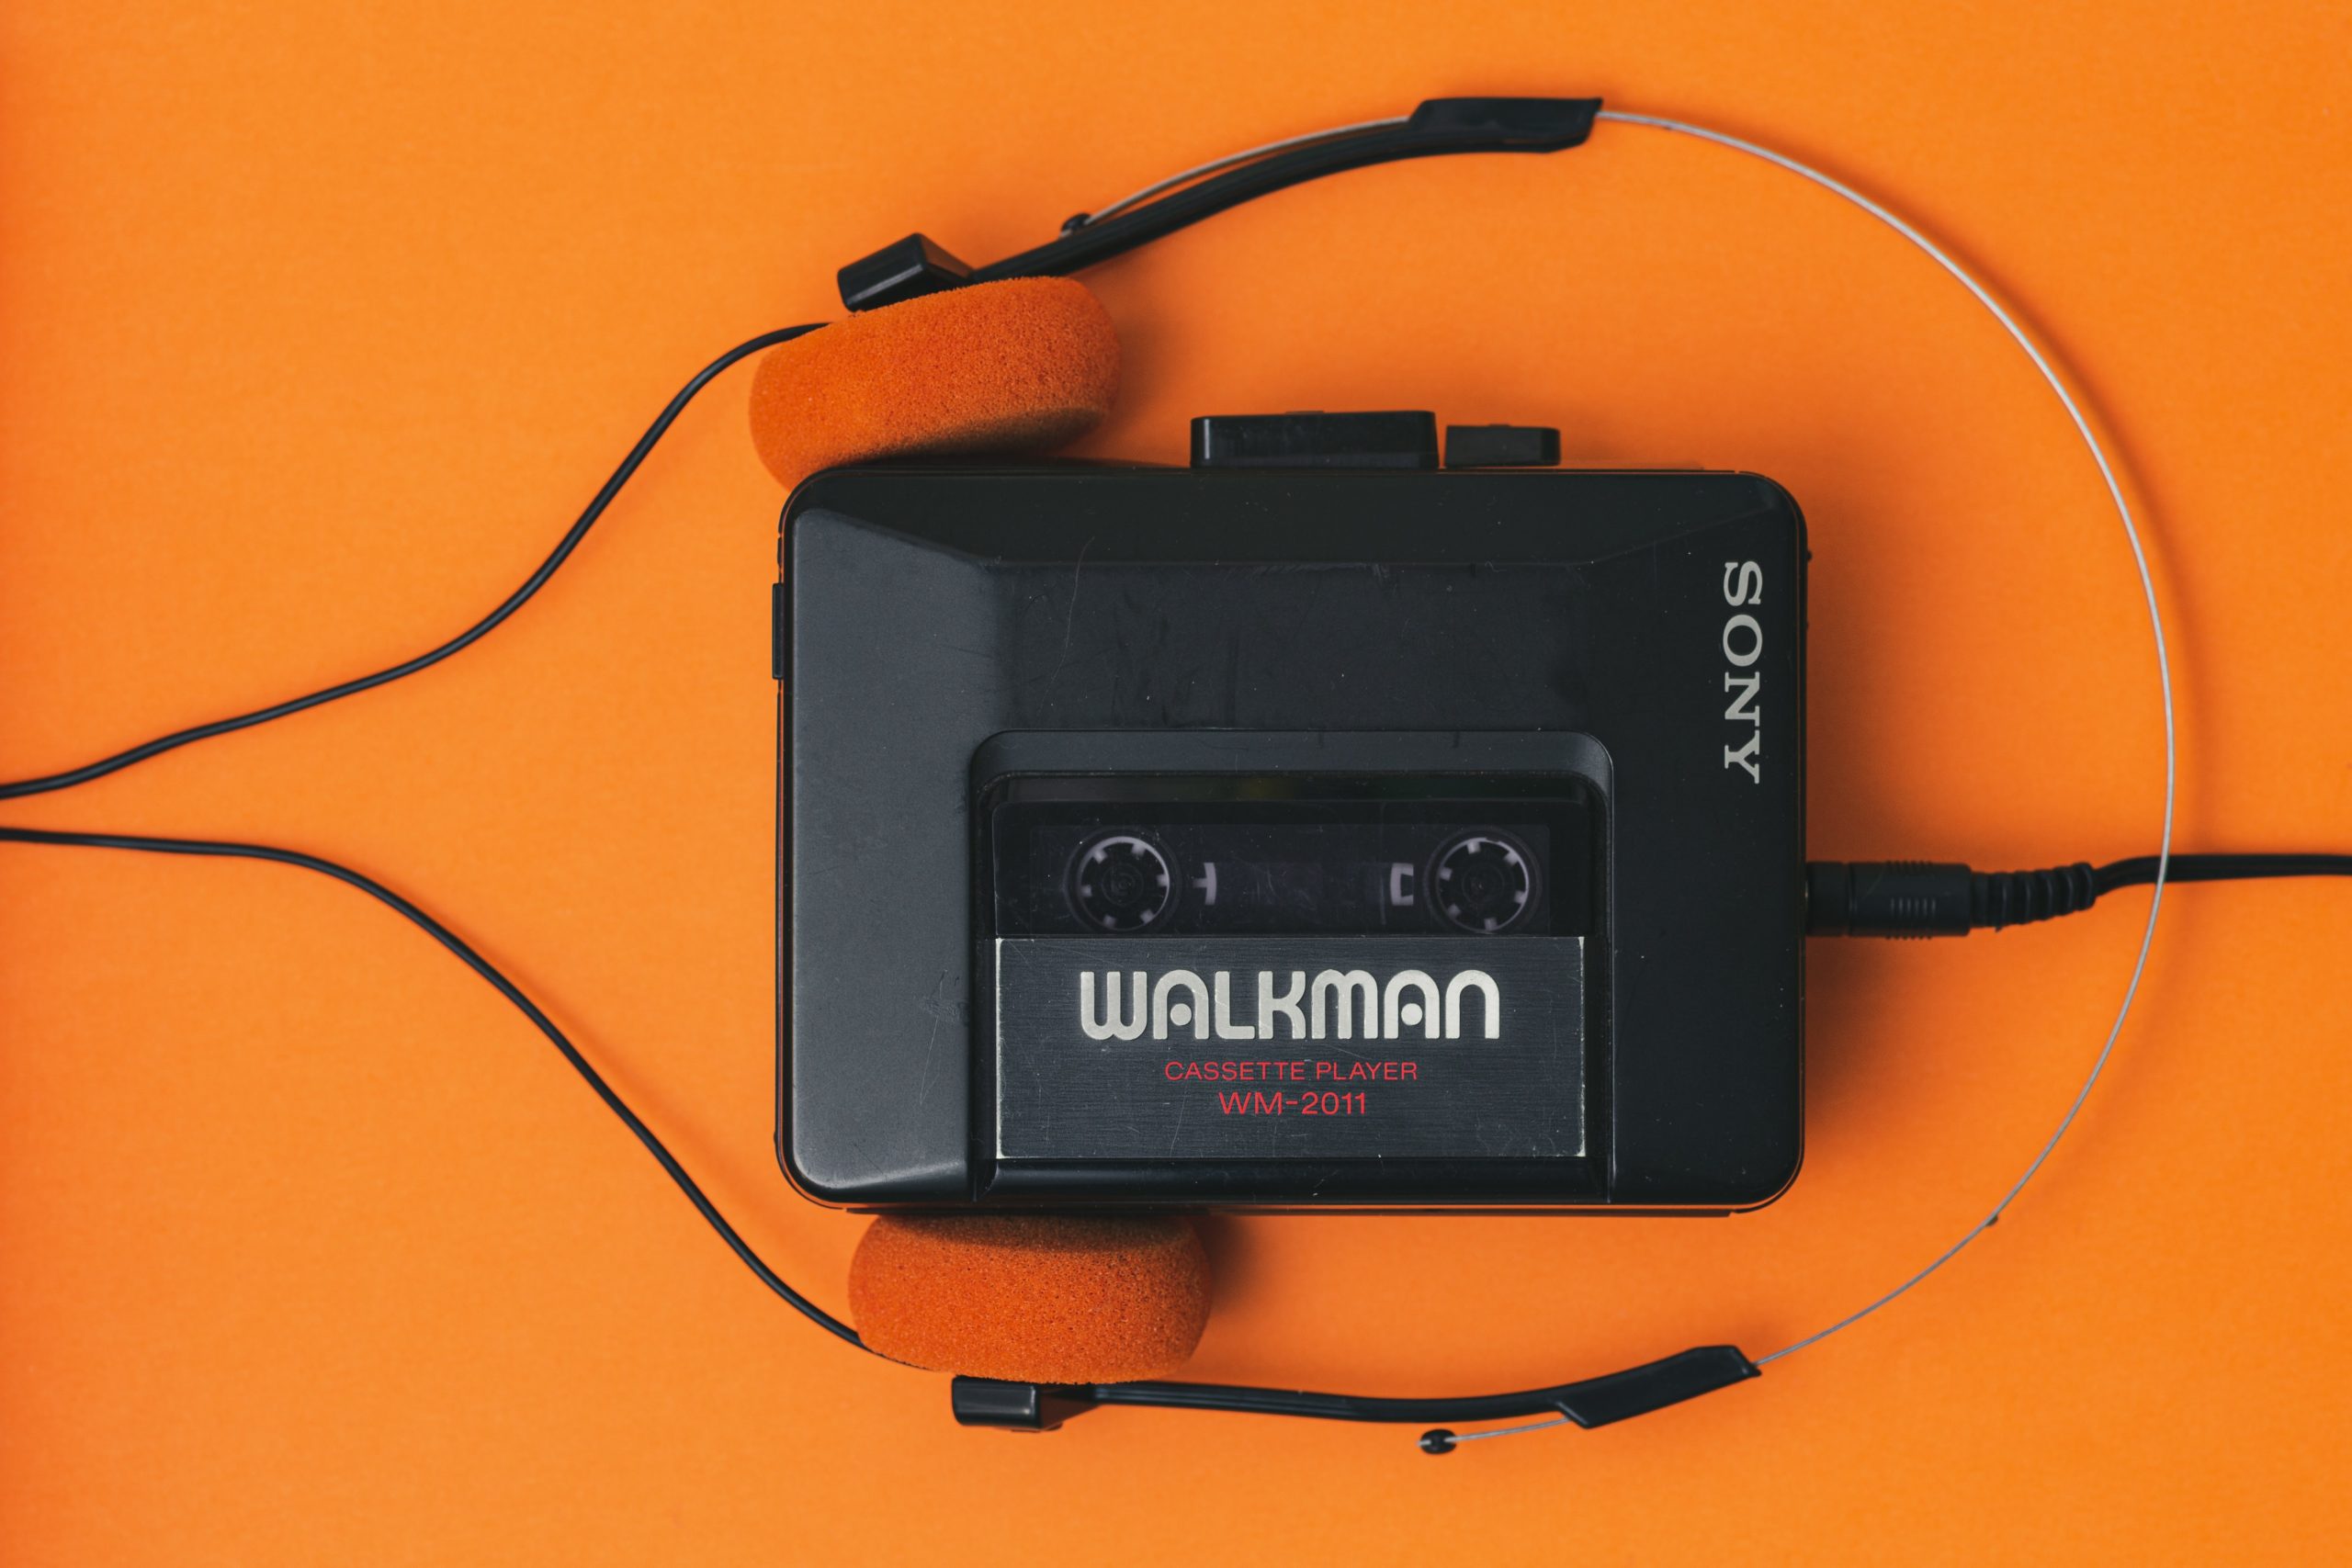 Walkman device on orange background.